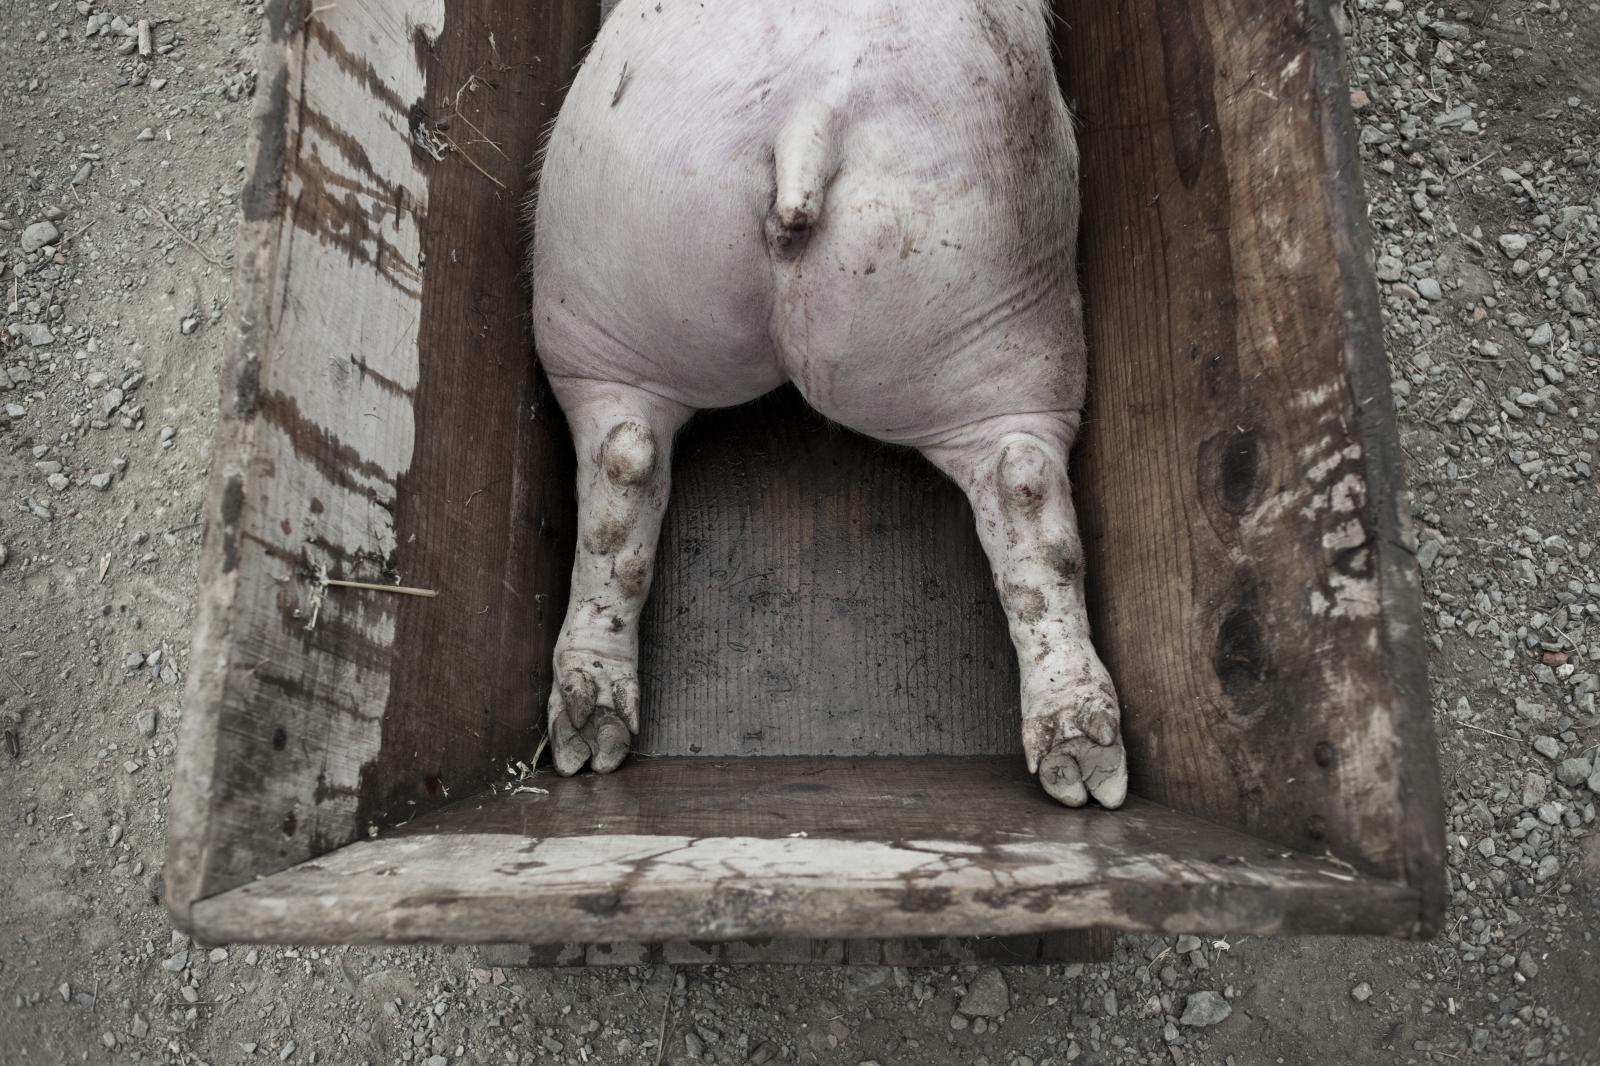 Matança del porc, 2012 | Buy this image